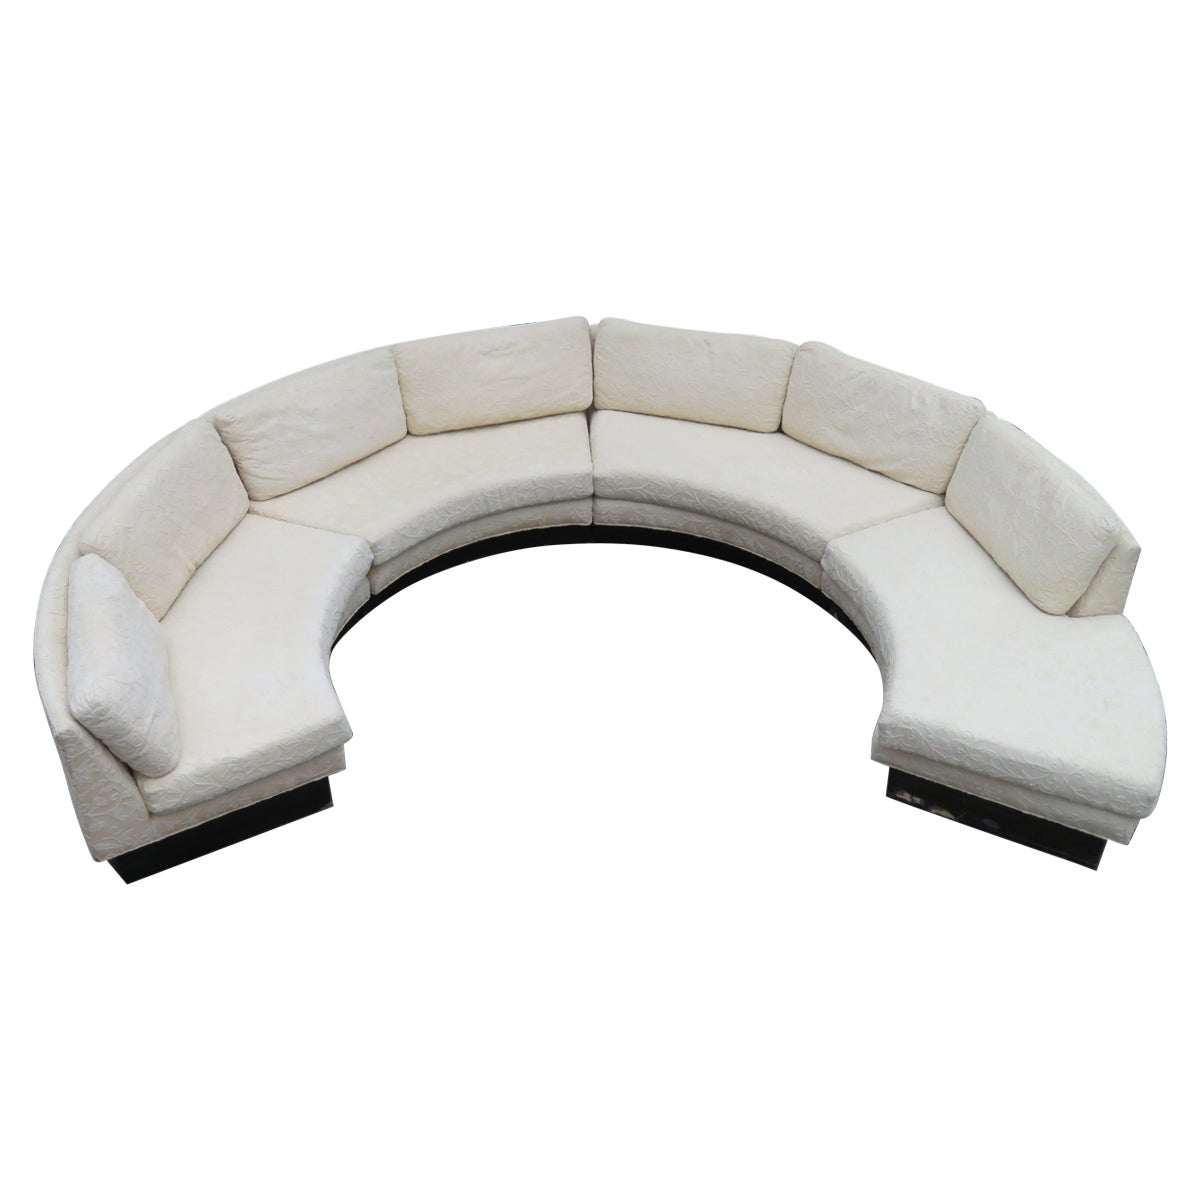 Stunning 4-Piece Erwin Lambeth Circular Curved Sofa Sectional Mid-Century Modern